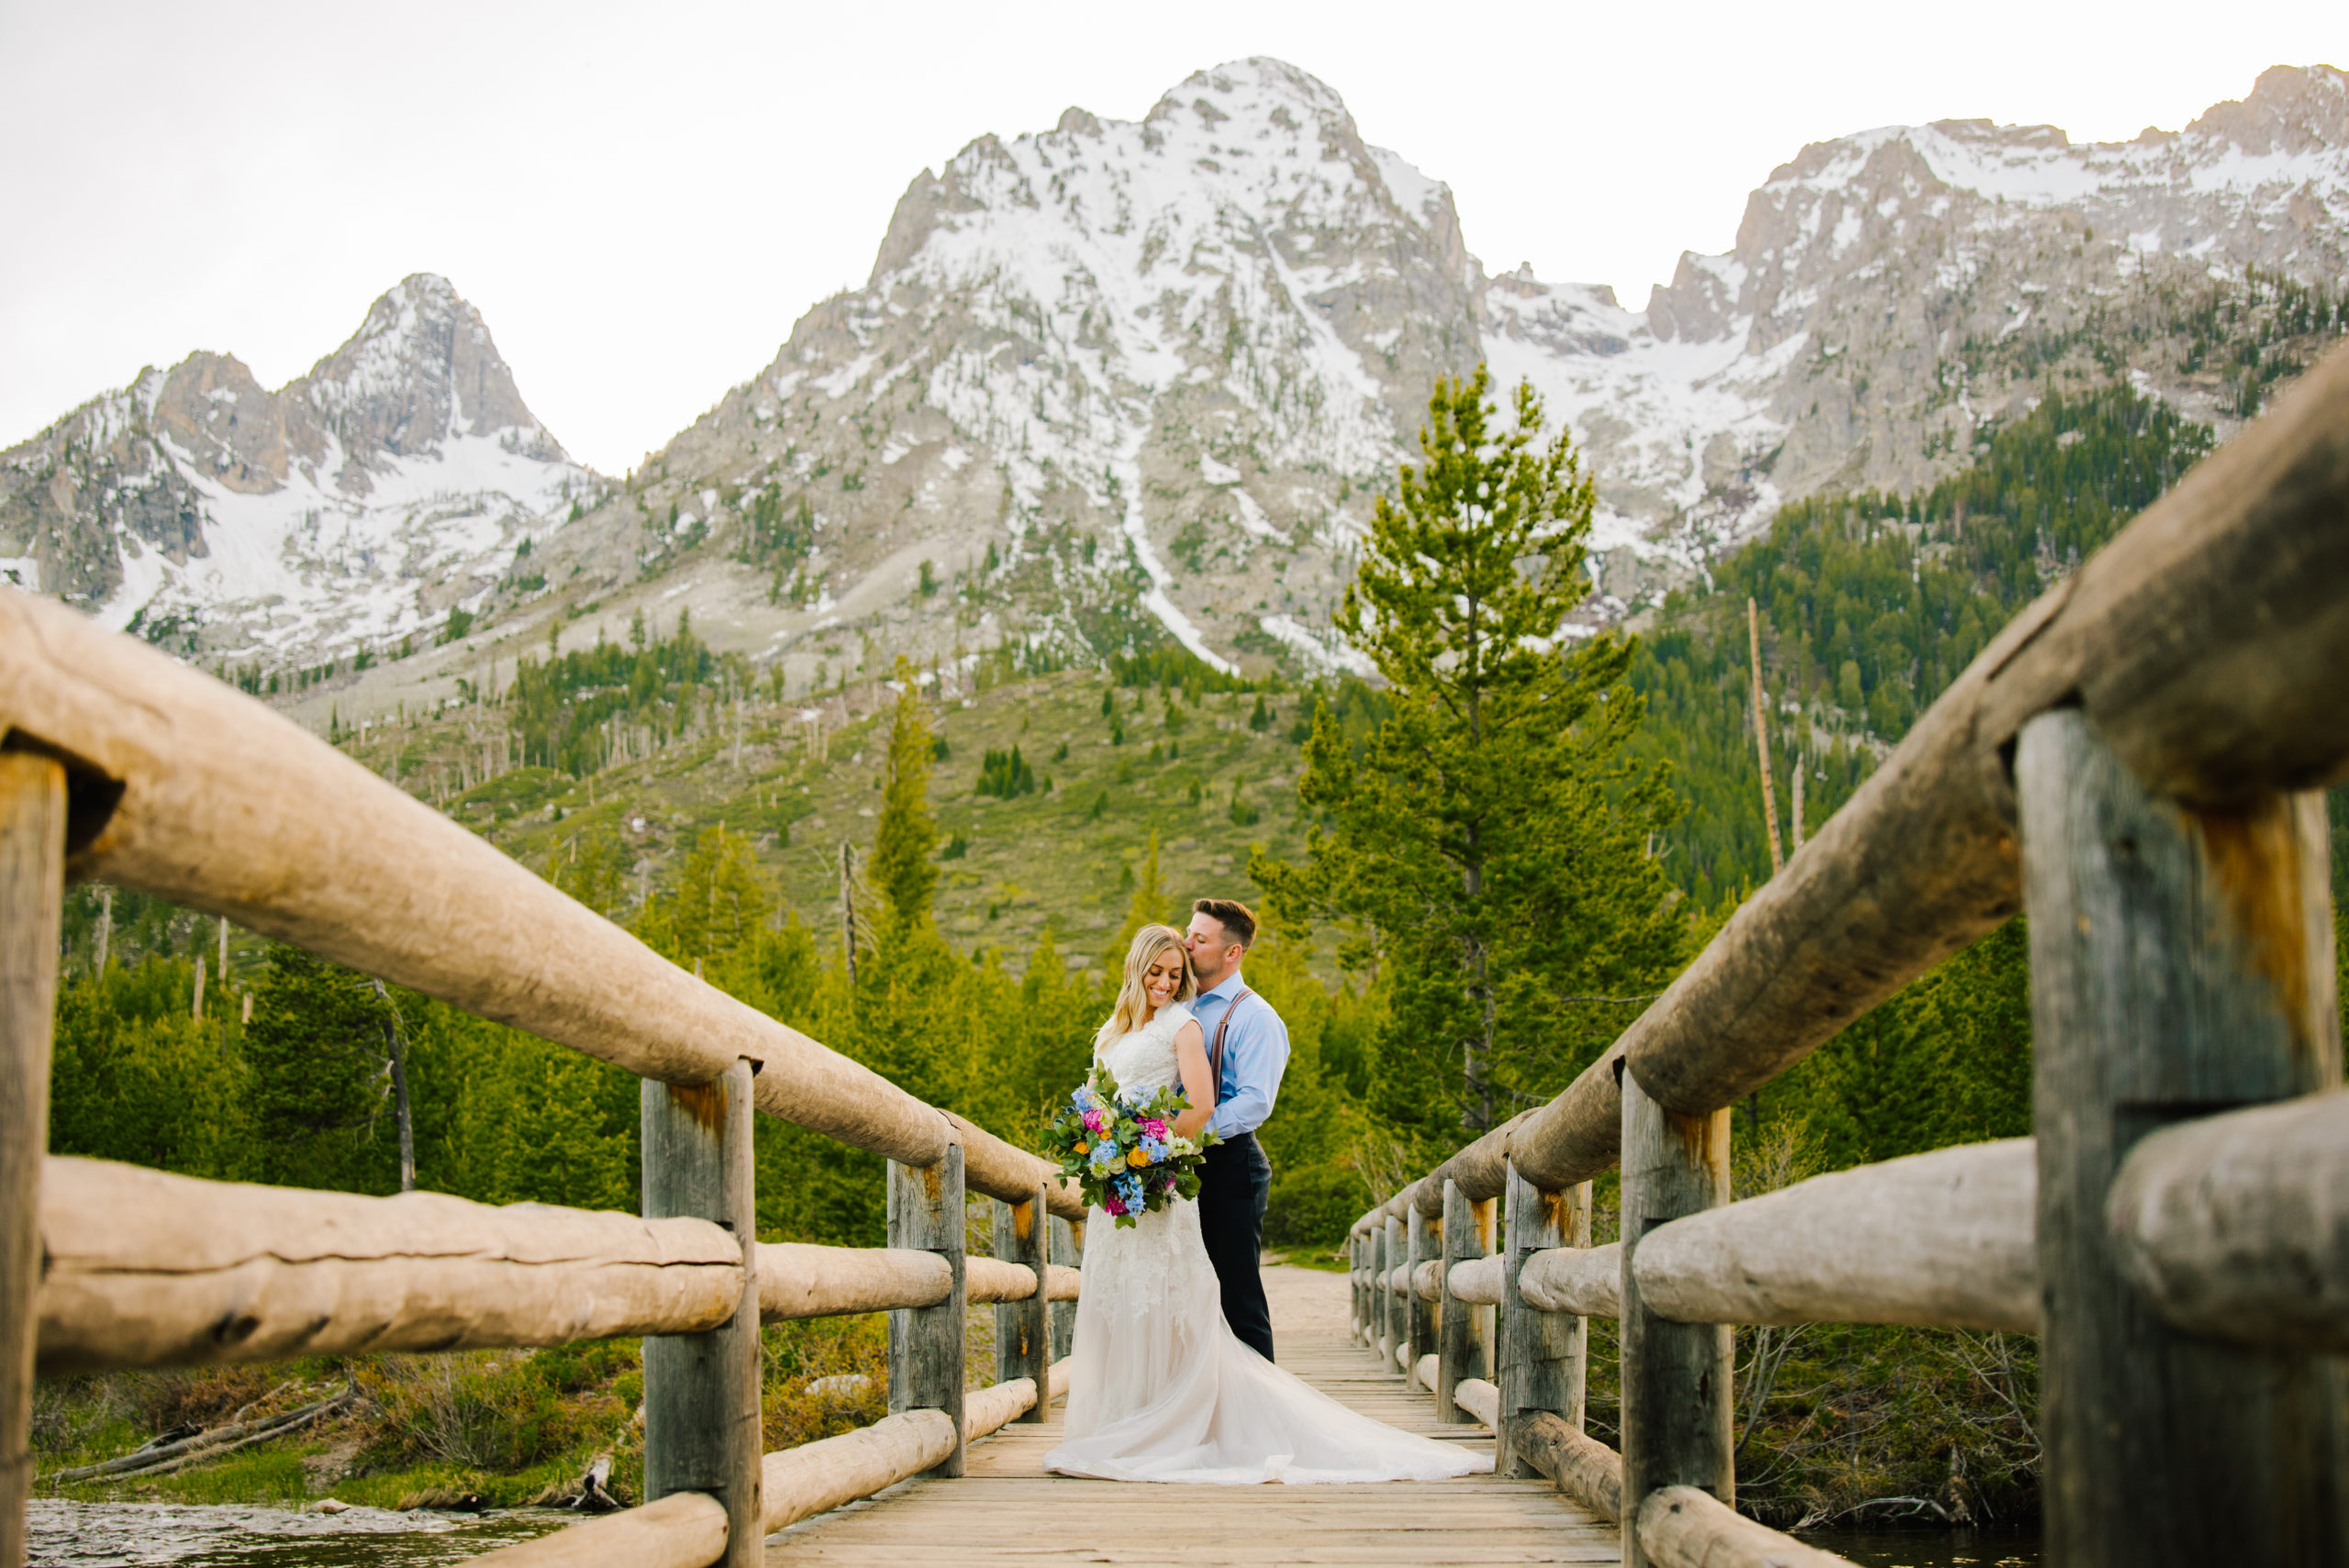 Jackson Hole wedding photographer captures bride and groom embracing on bridge in Grand Teton National Park